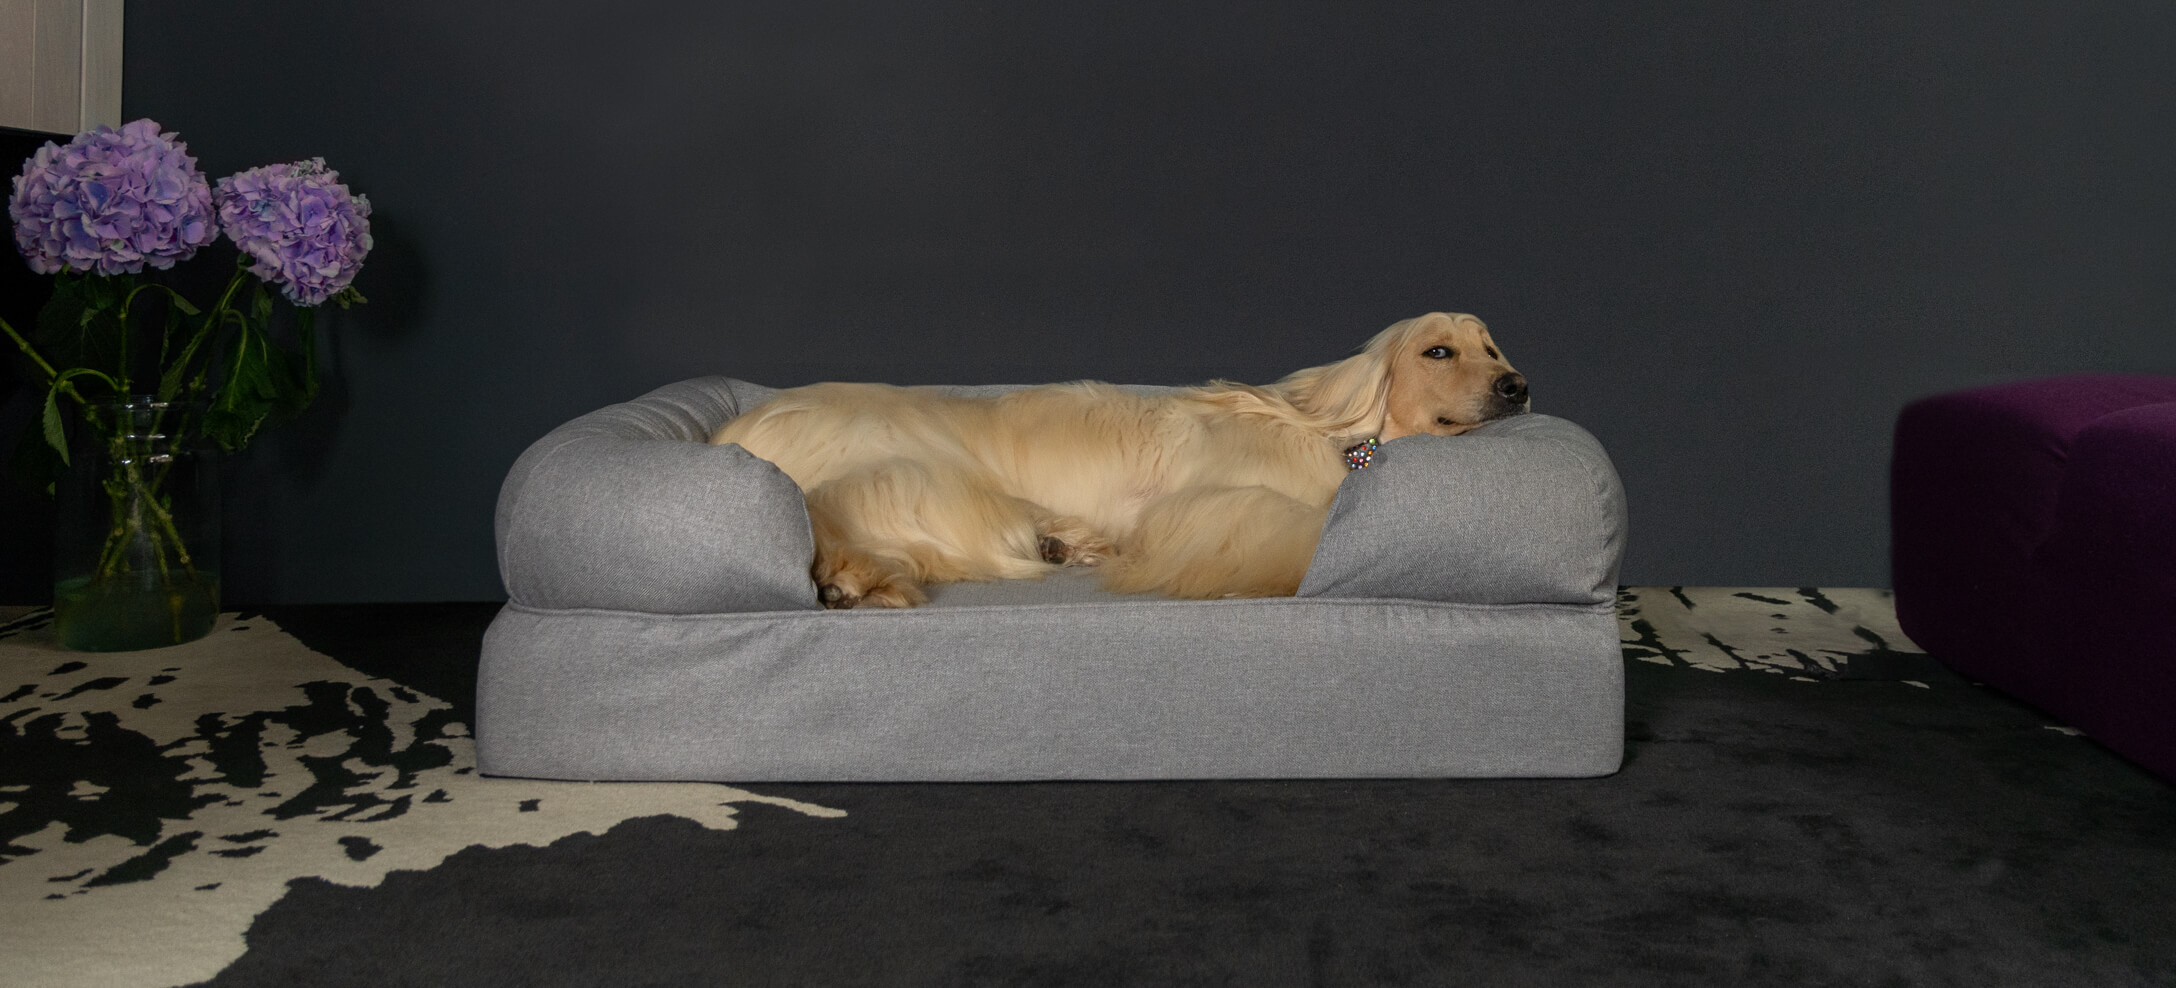 Afghan hound on Omlet's Bolster dog bed